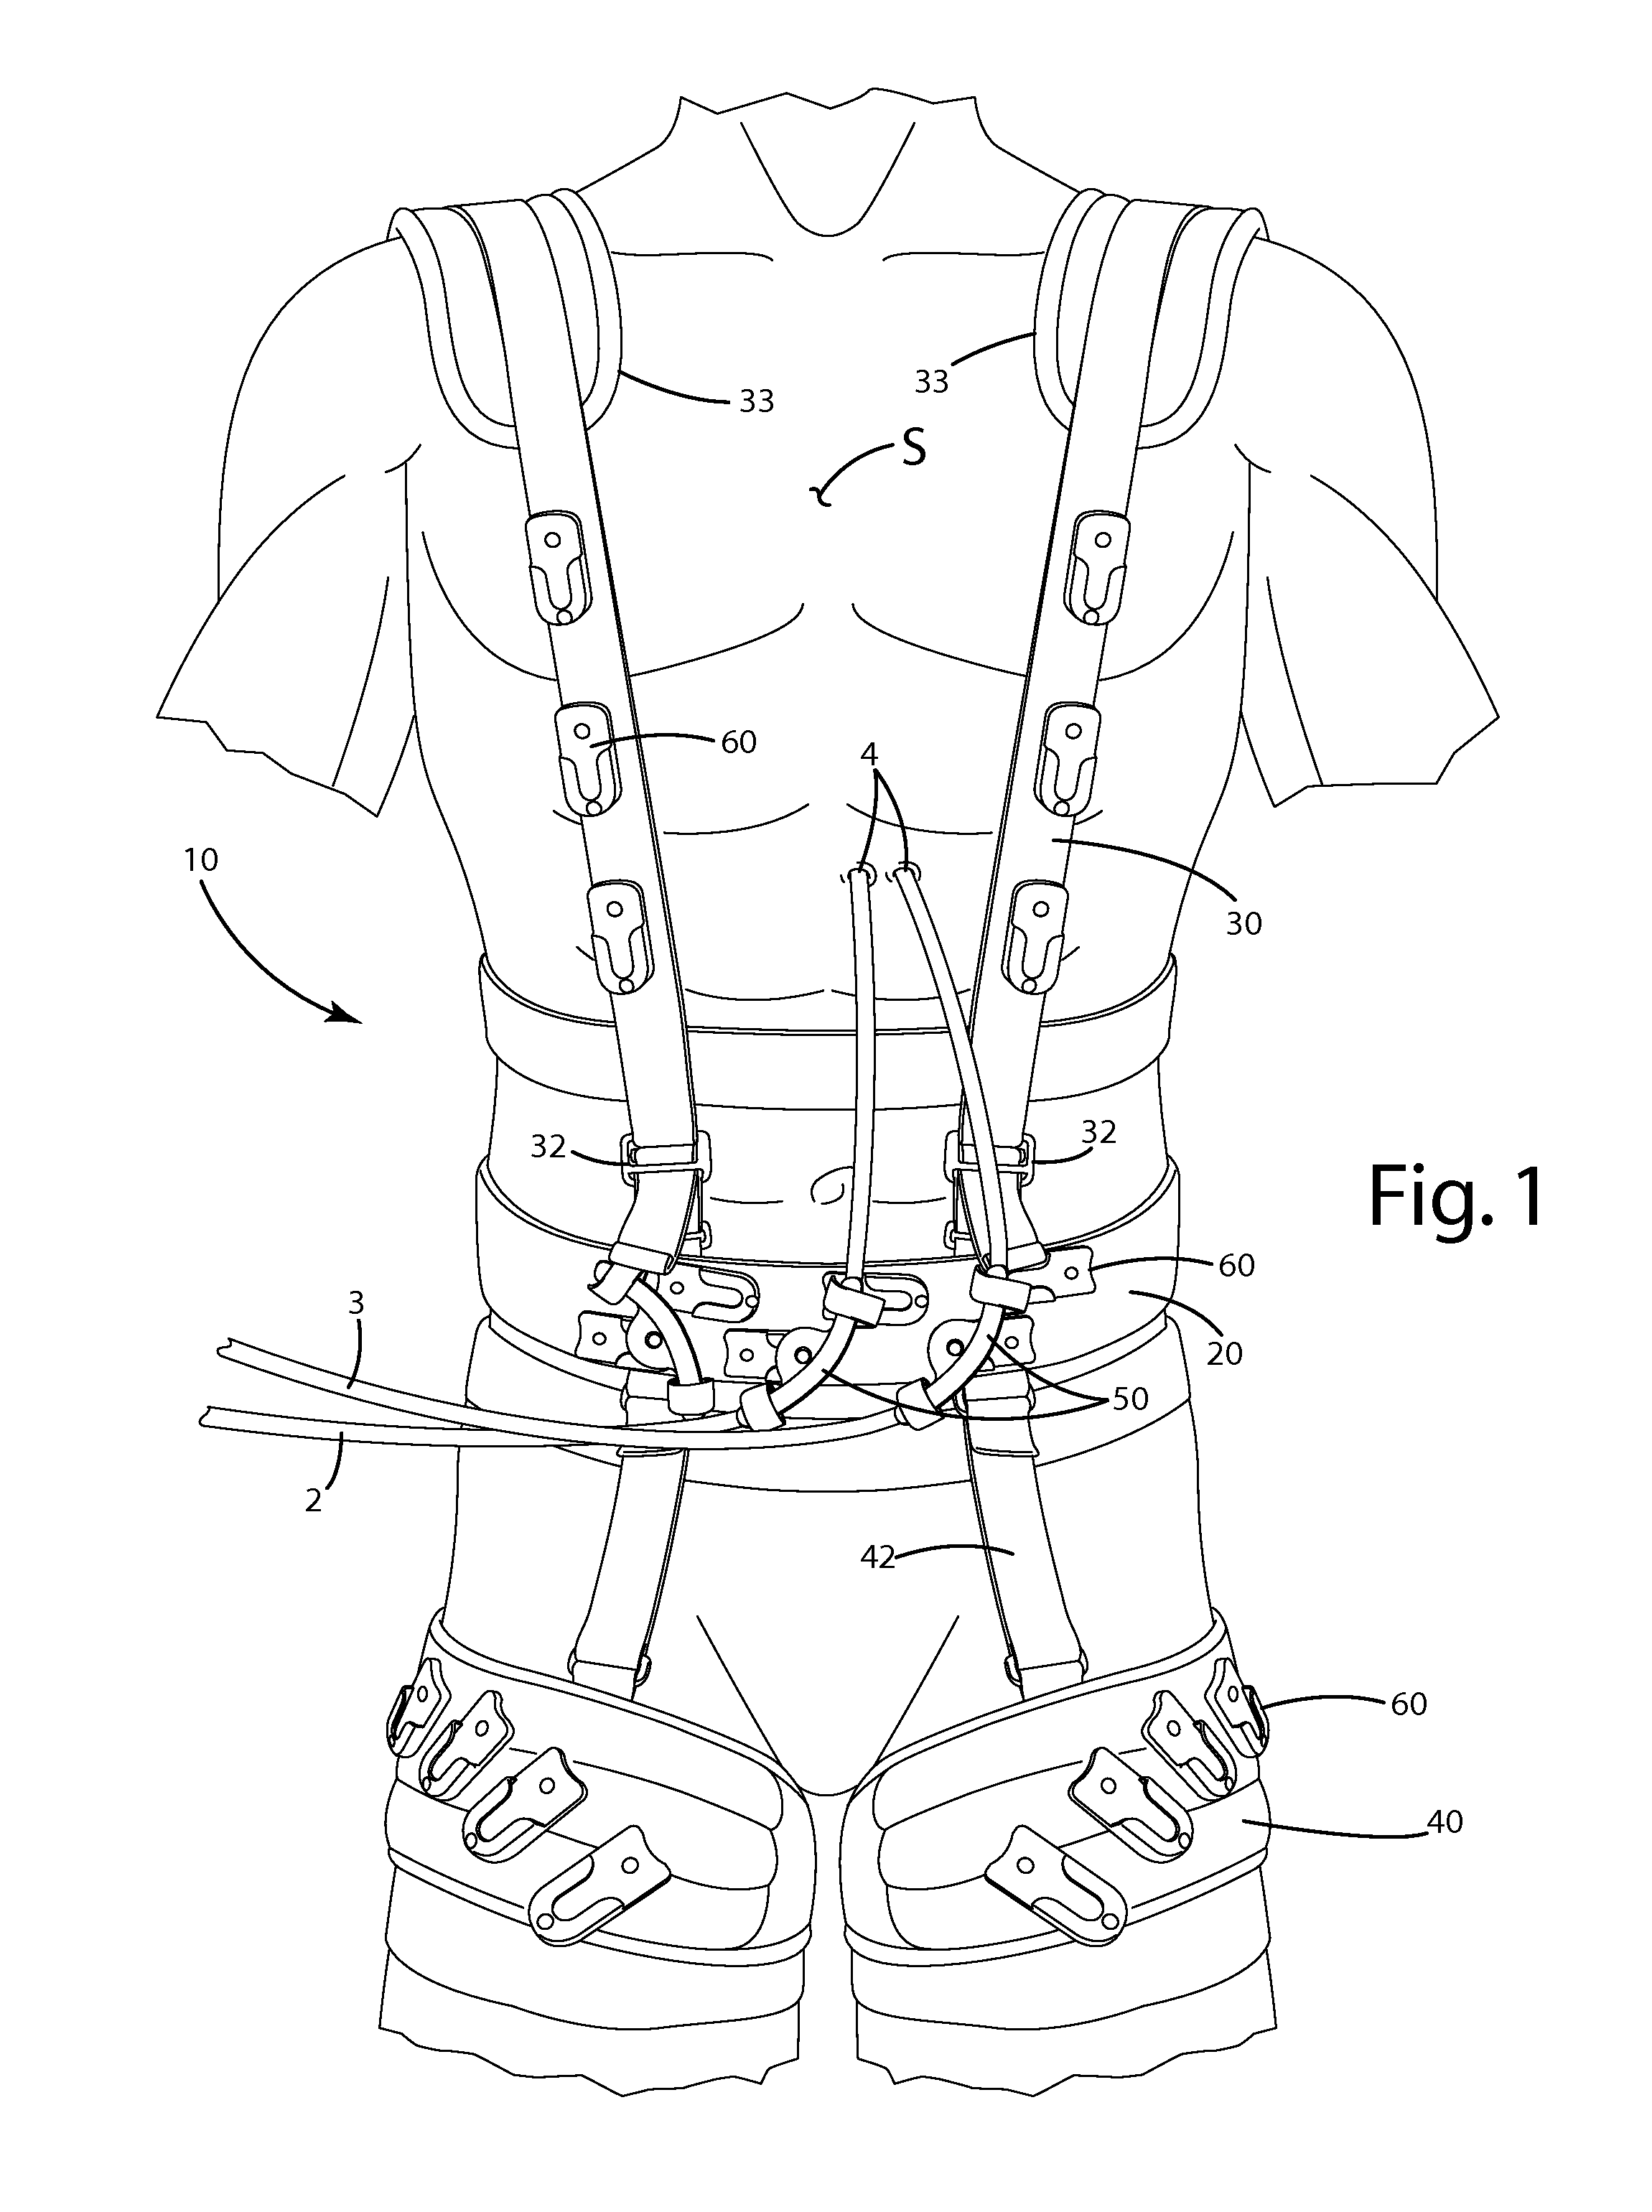 Medical tube harness